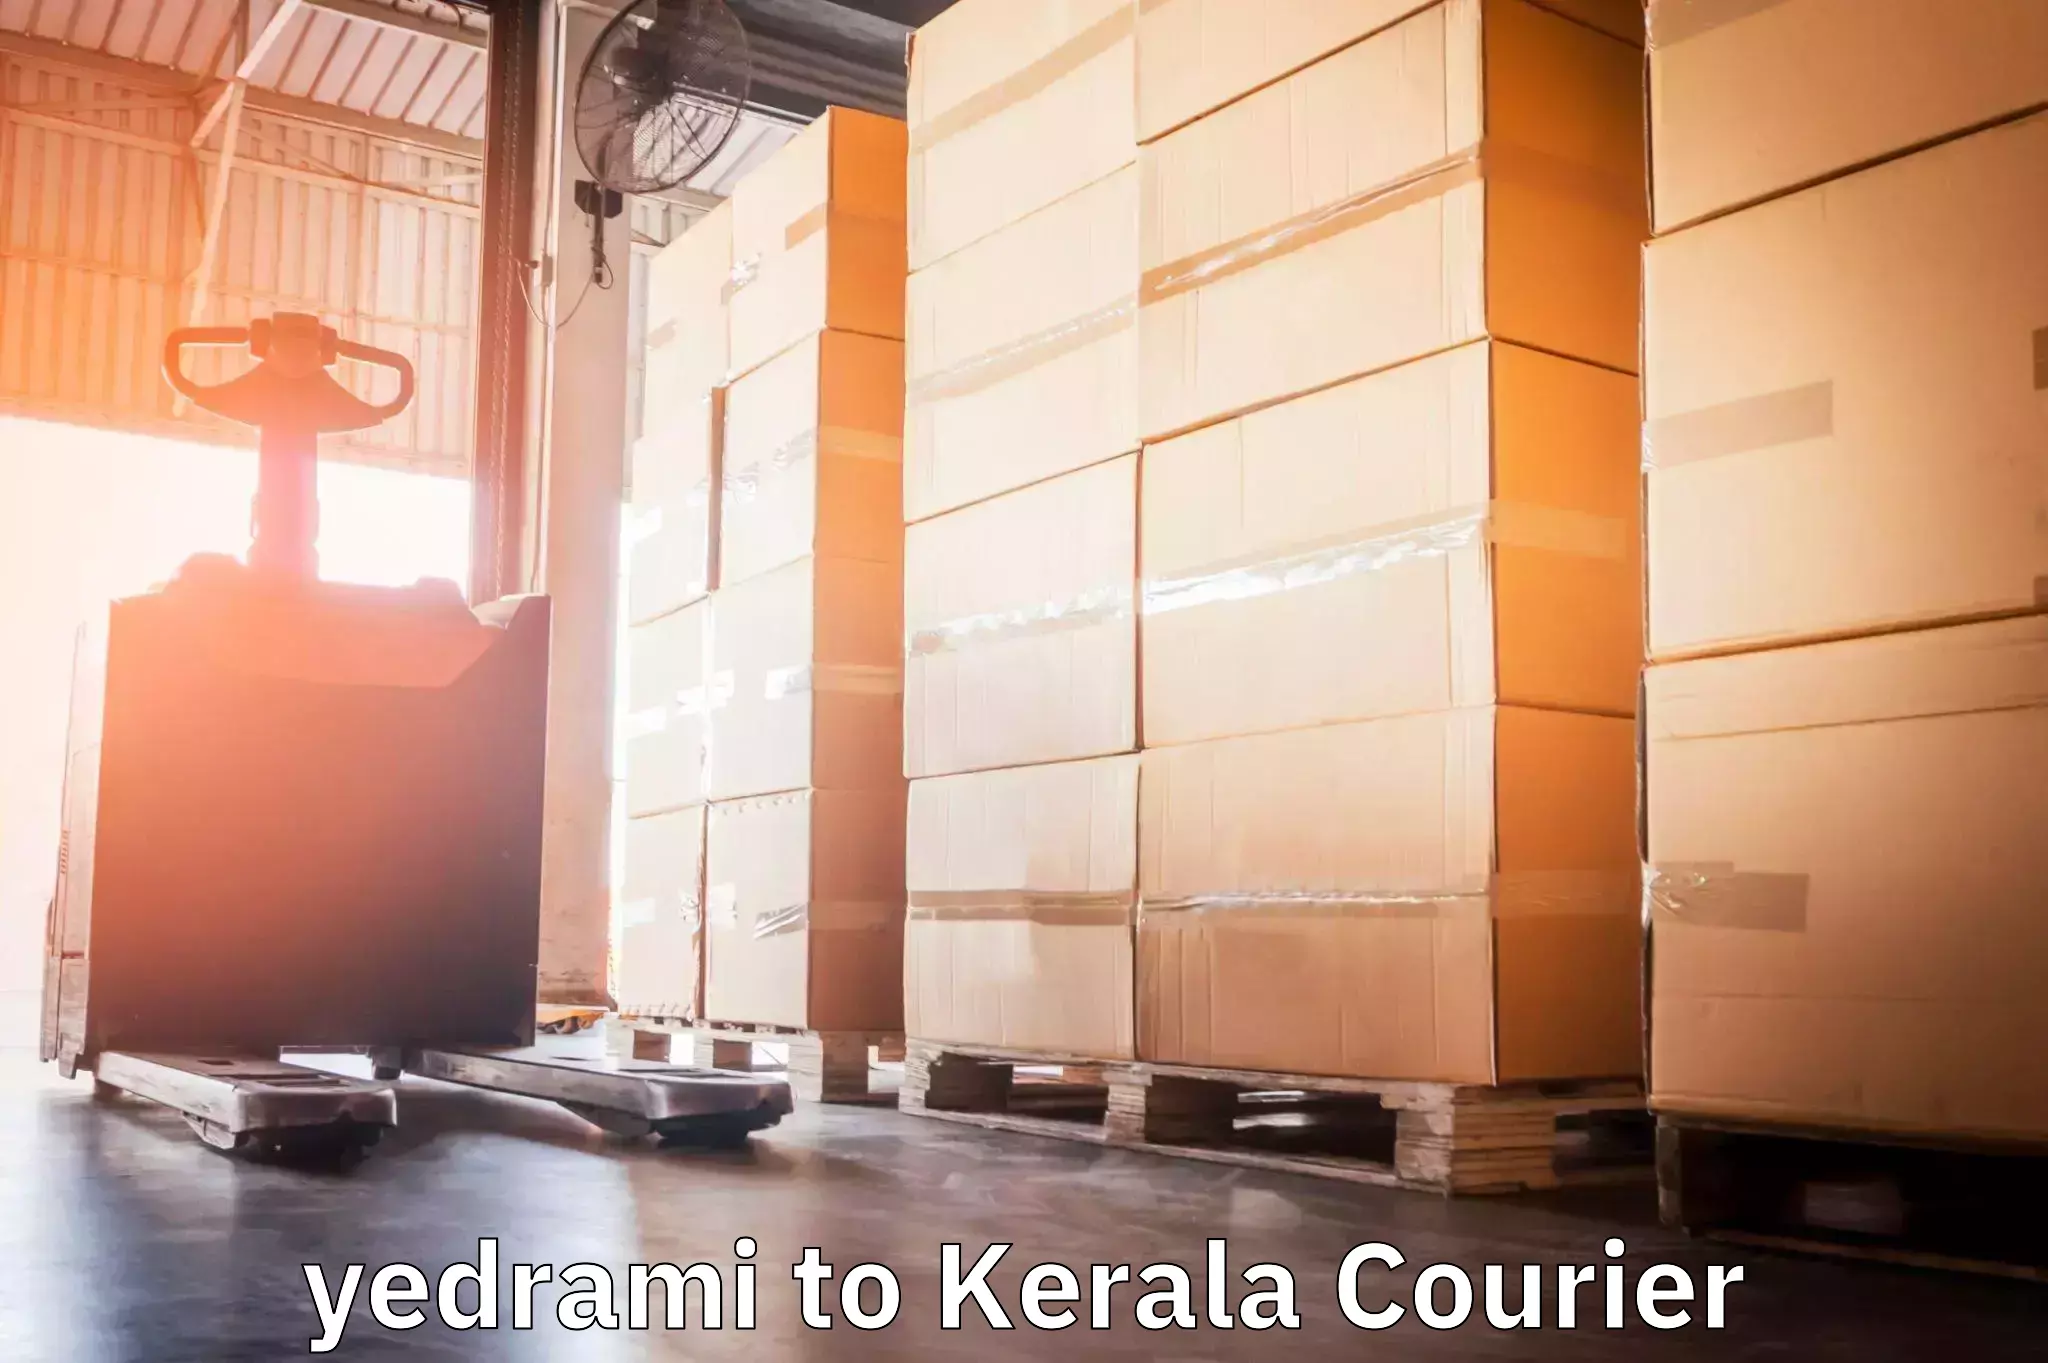 24-hour courier service yedrami to Calicut University Malappuram